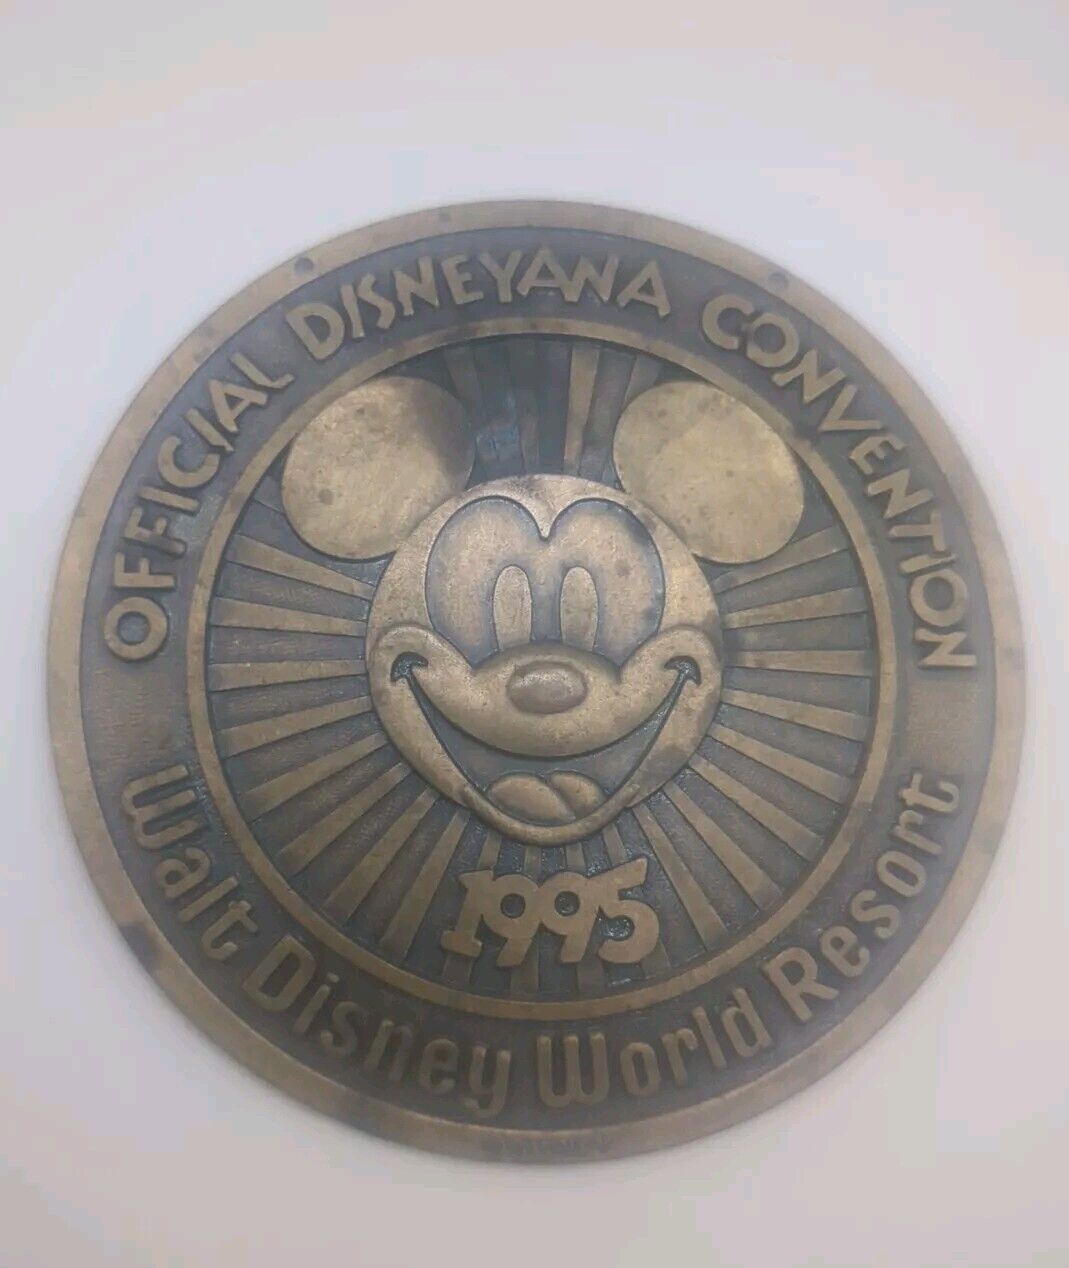 Vintage 1995 Disneyana Convention Medallion